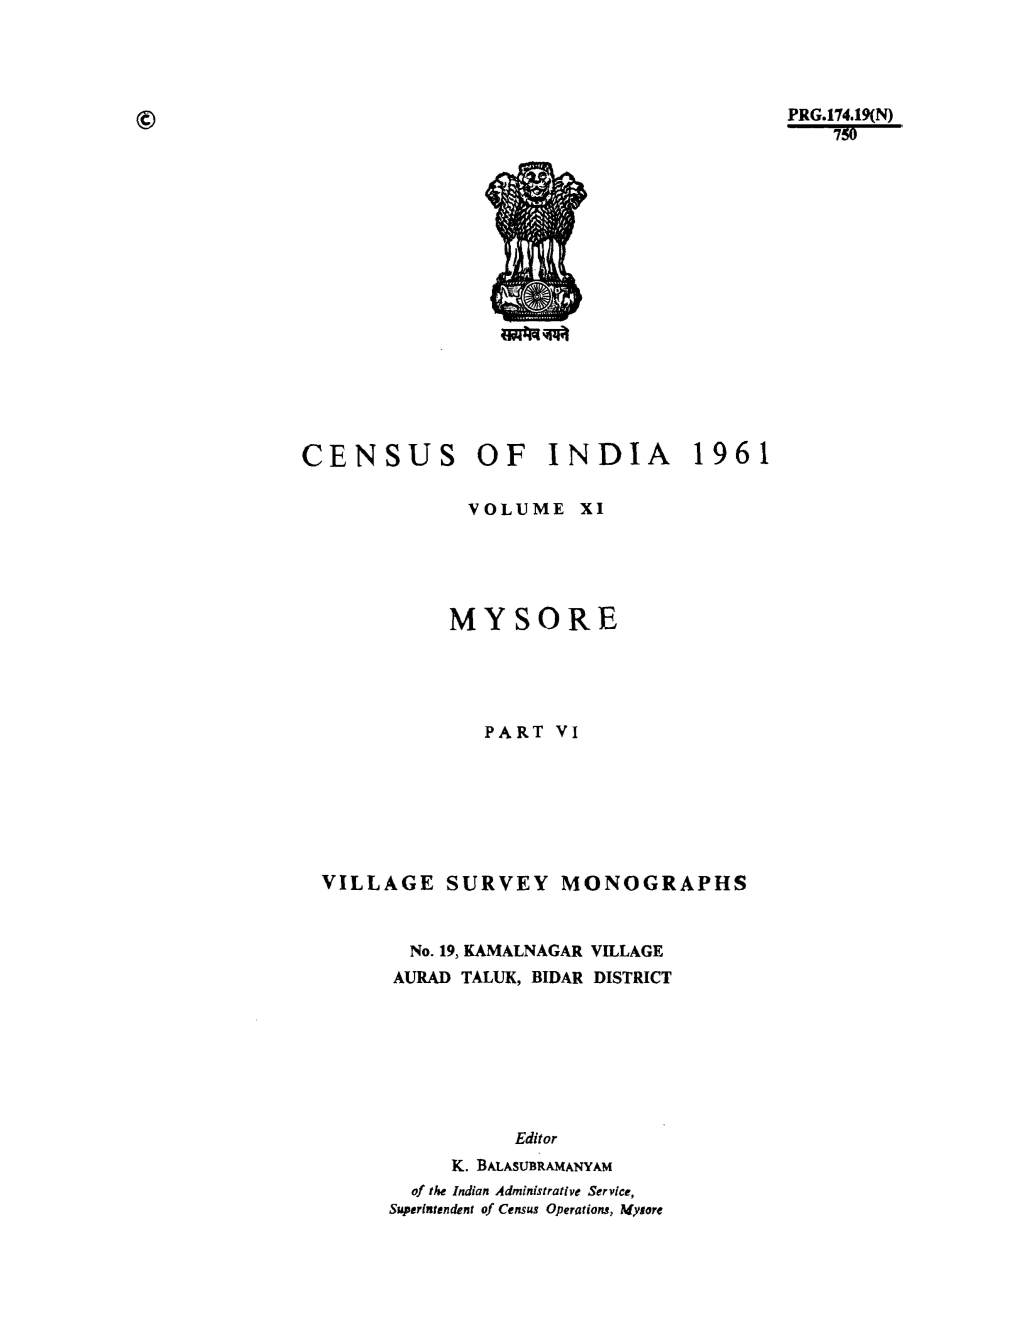 Village Survey Monographs, Kamalnagar Village, No-19, Part VI, Vol-XI